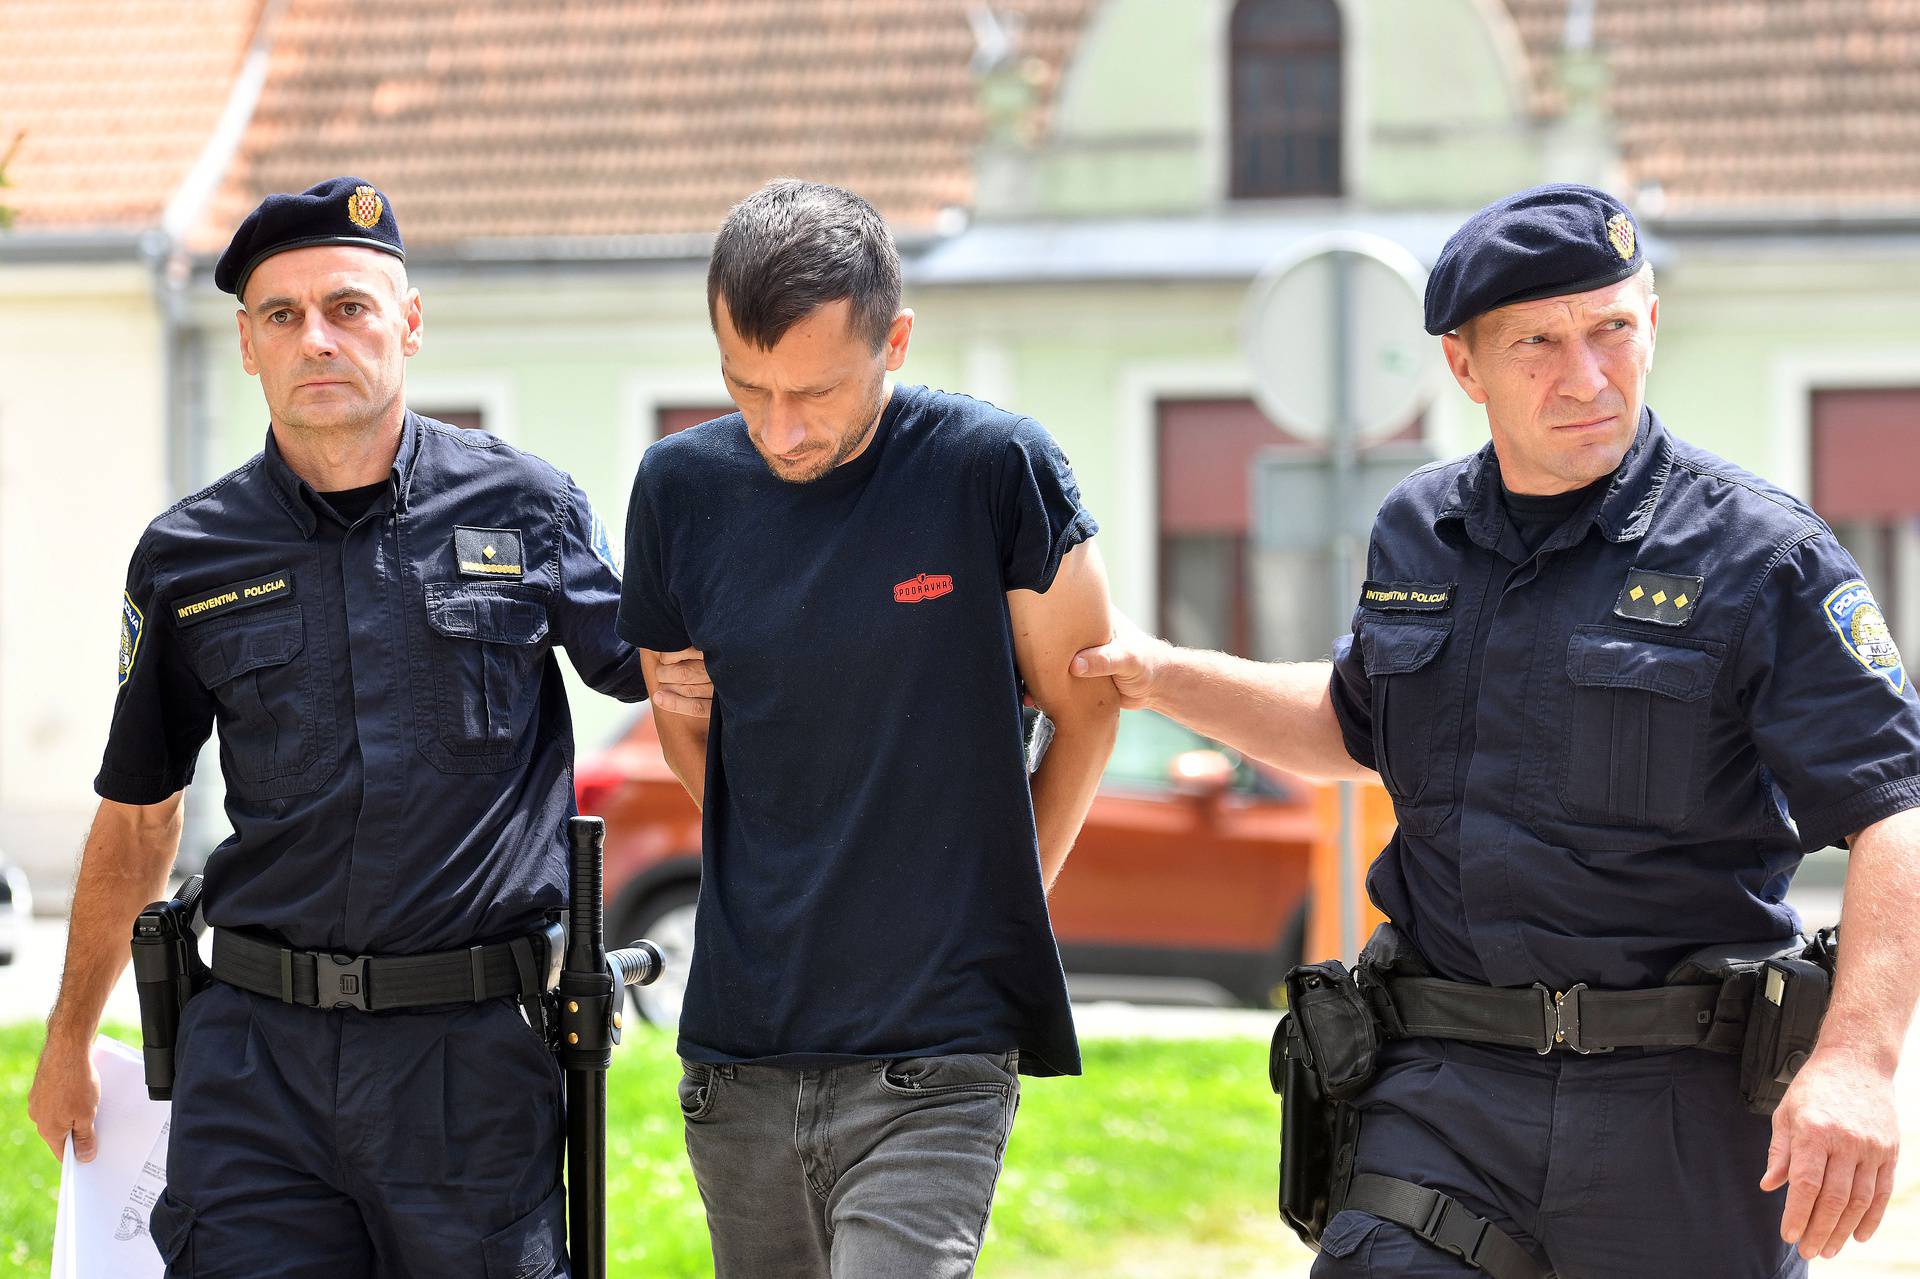 Varaždin: Muškarac osumnjičen za ubojstvo susjeda izveden pred suca